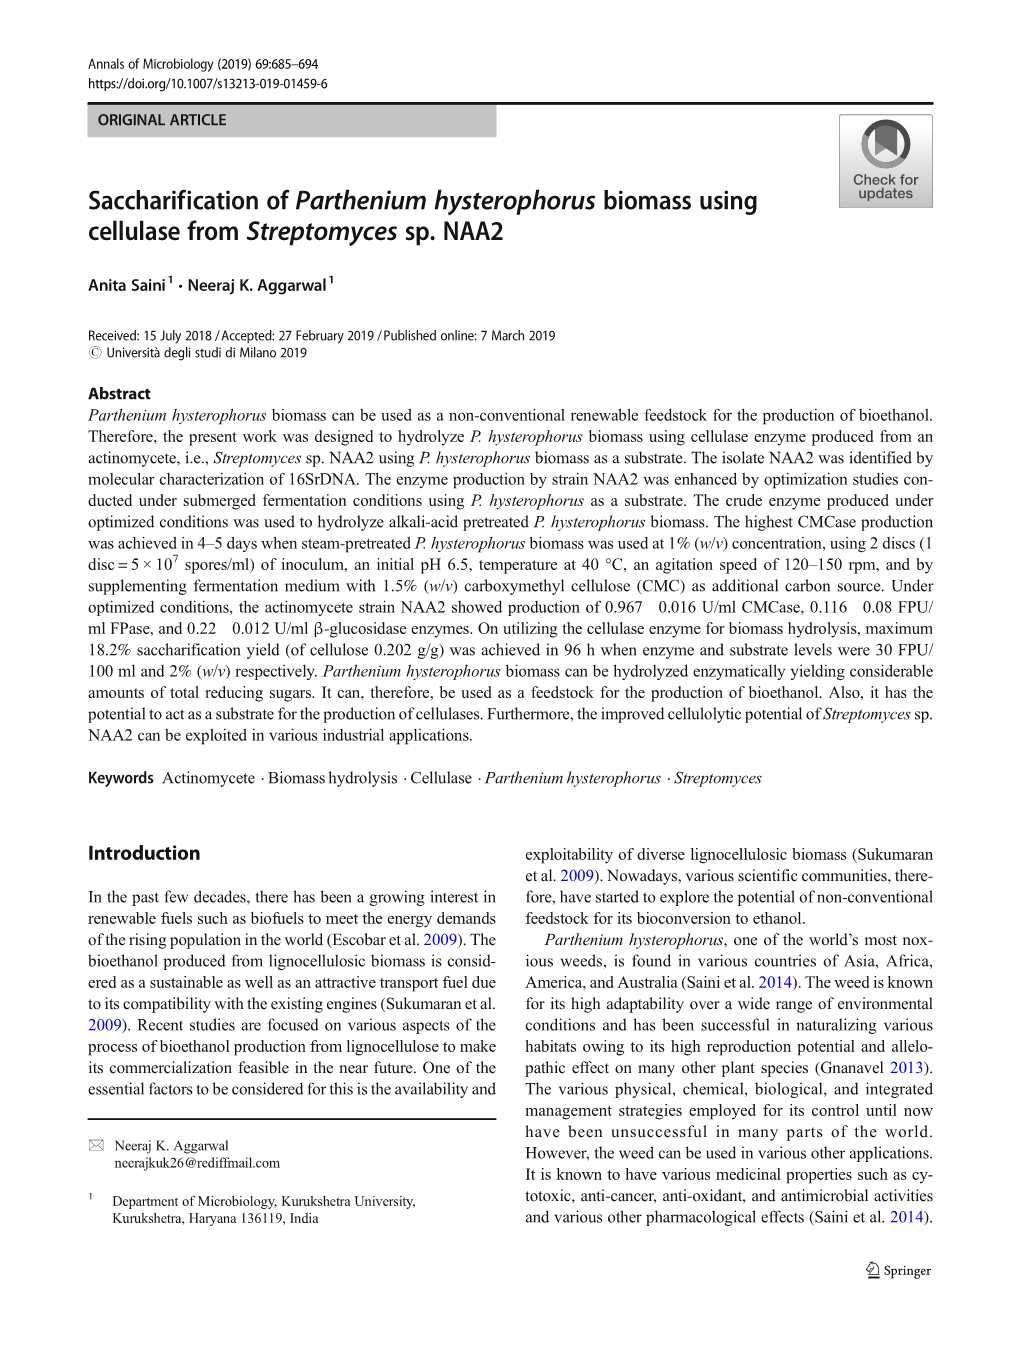 Saccharification of Parthenium Hysterophorus Biomass Using Cellulase from Streptomyces Sp